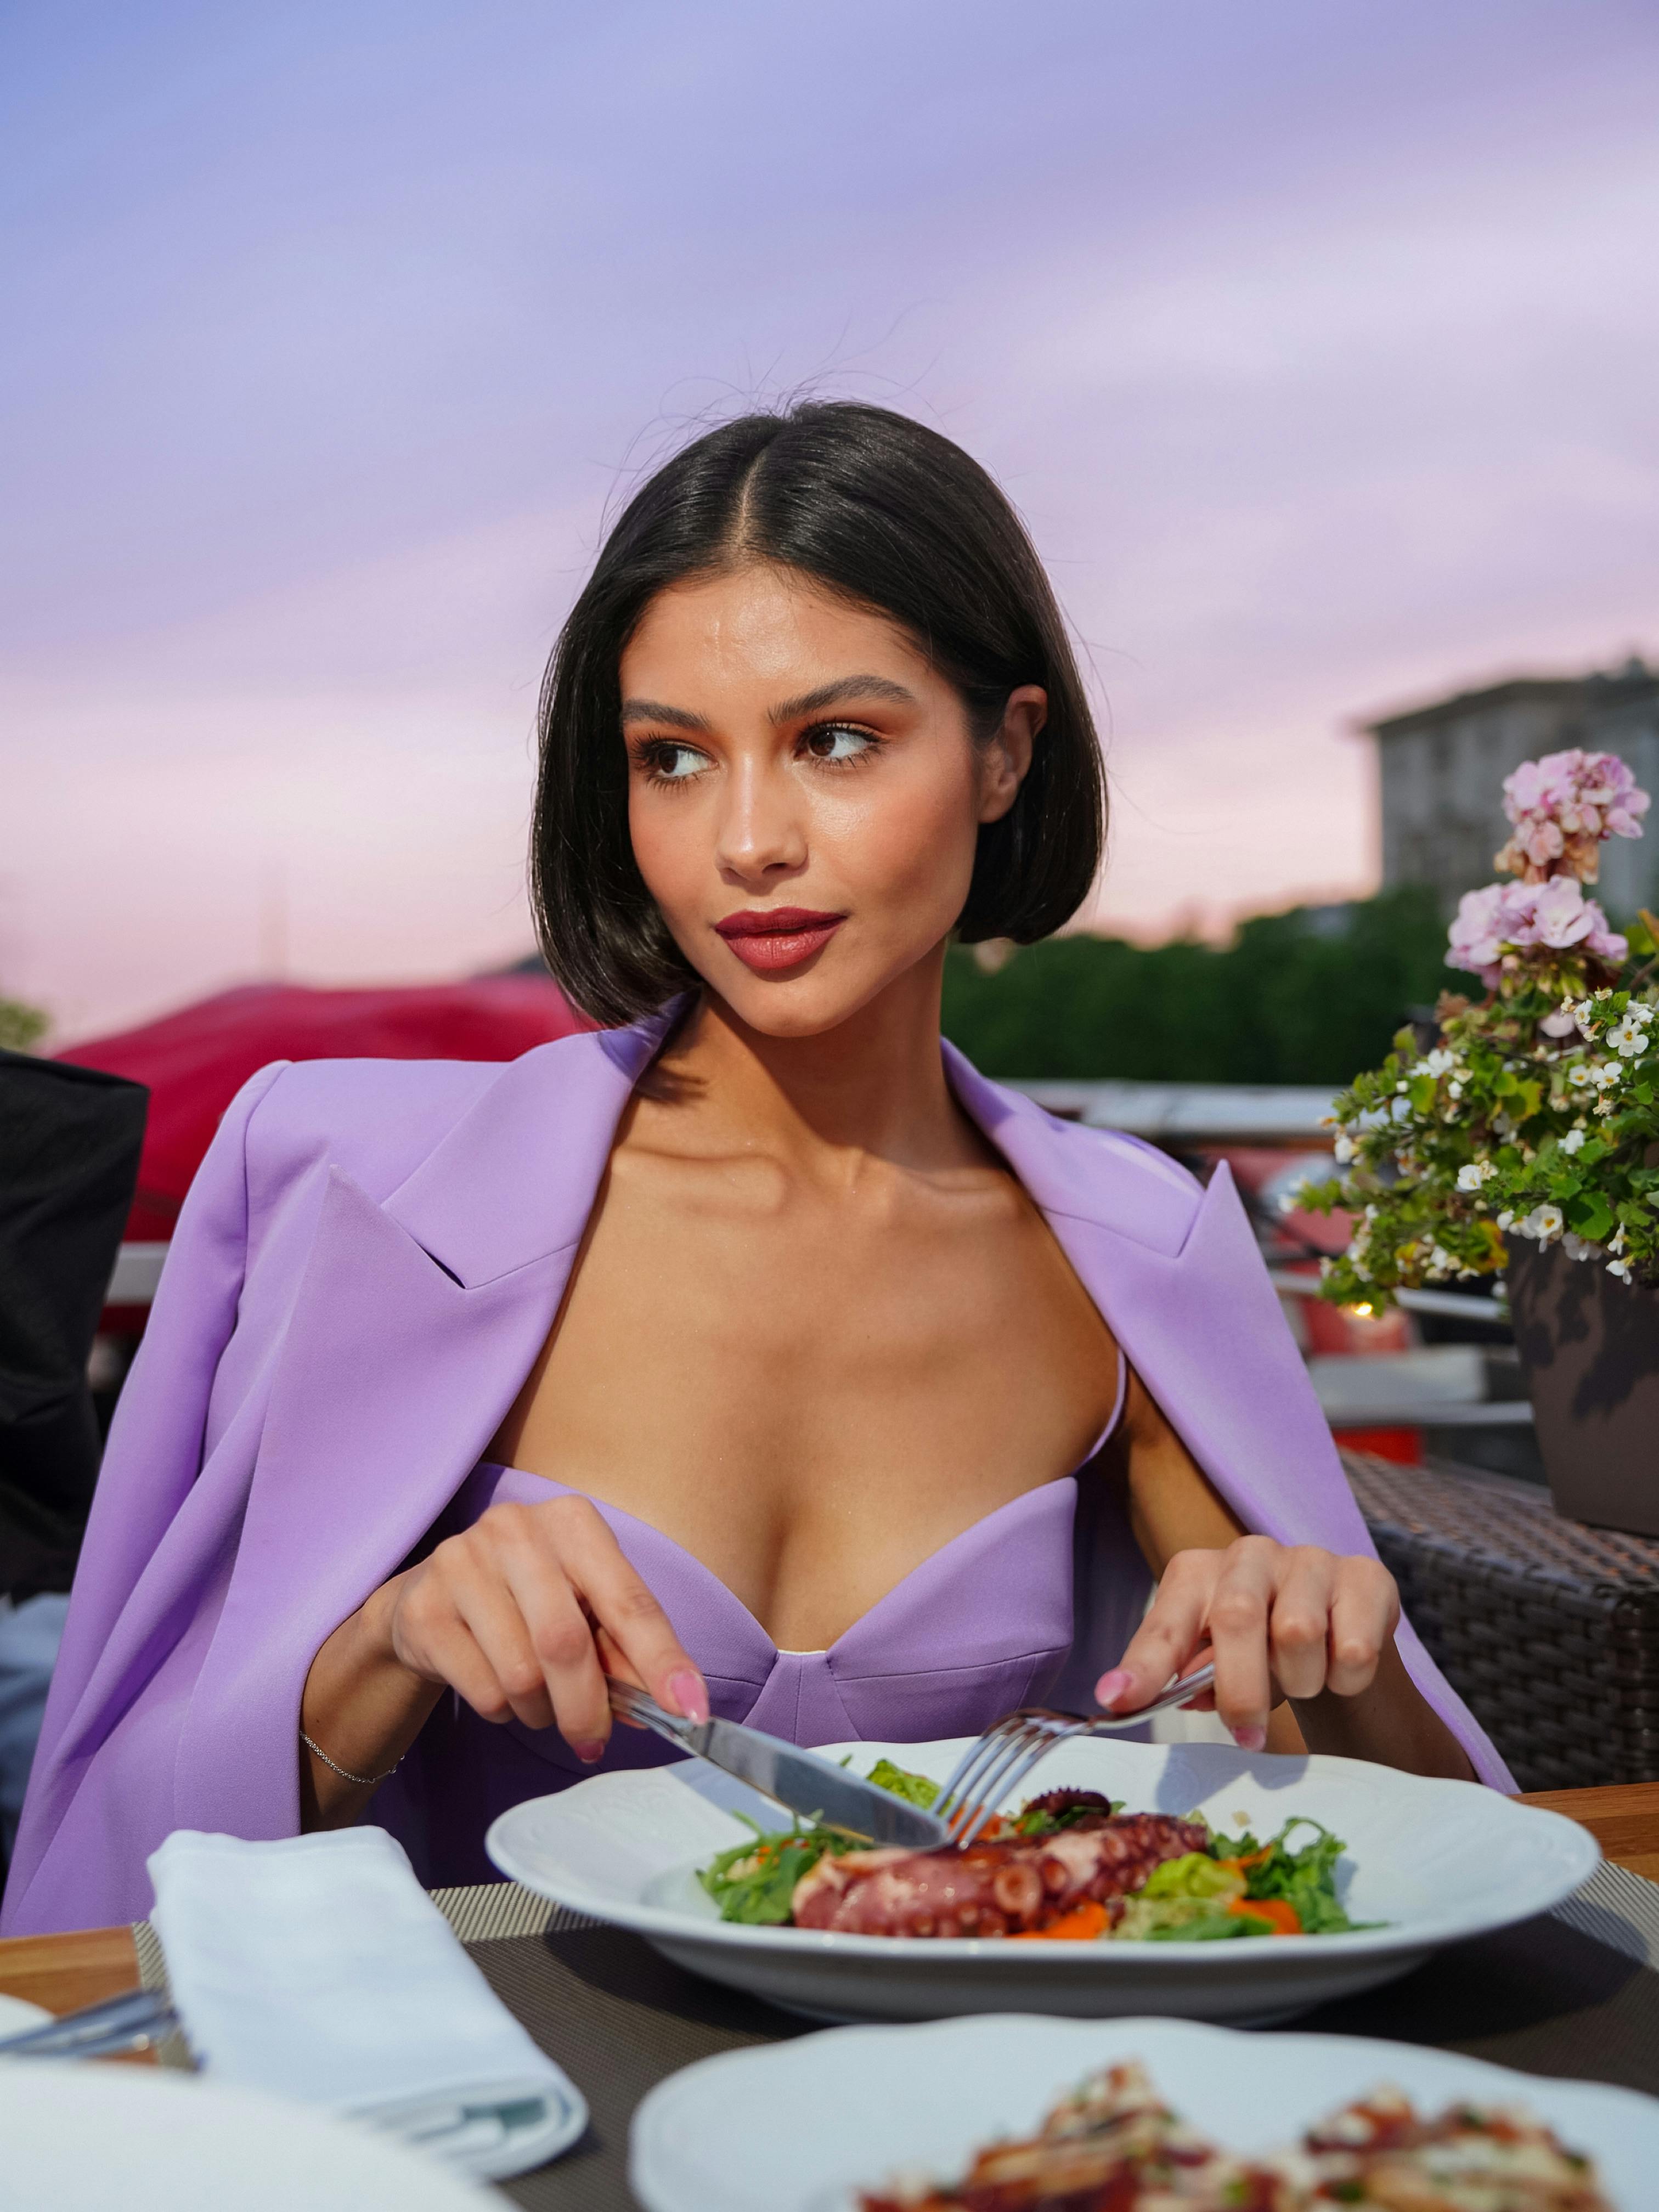 Mujer almorzando | Foto: Pexels